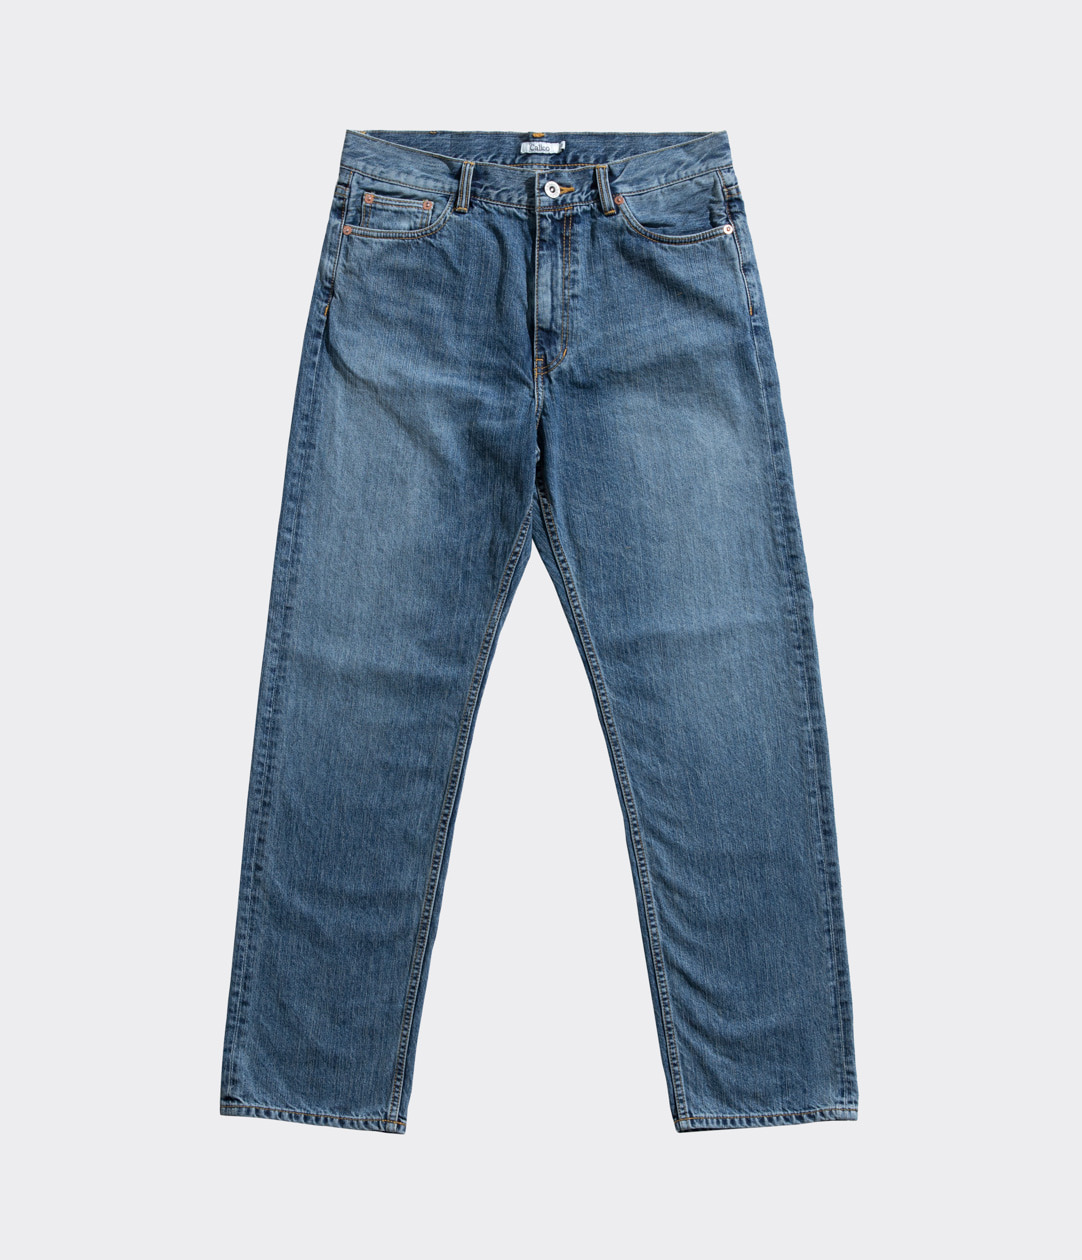 Calico Jeans 2.1/ Seaside Blue